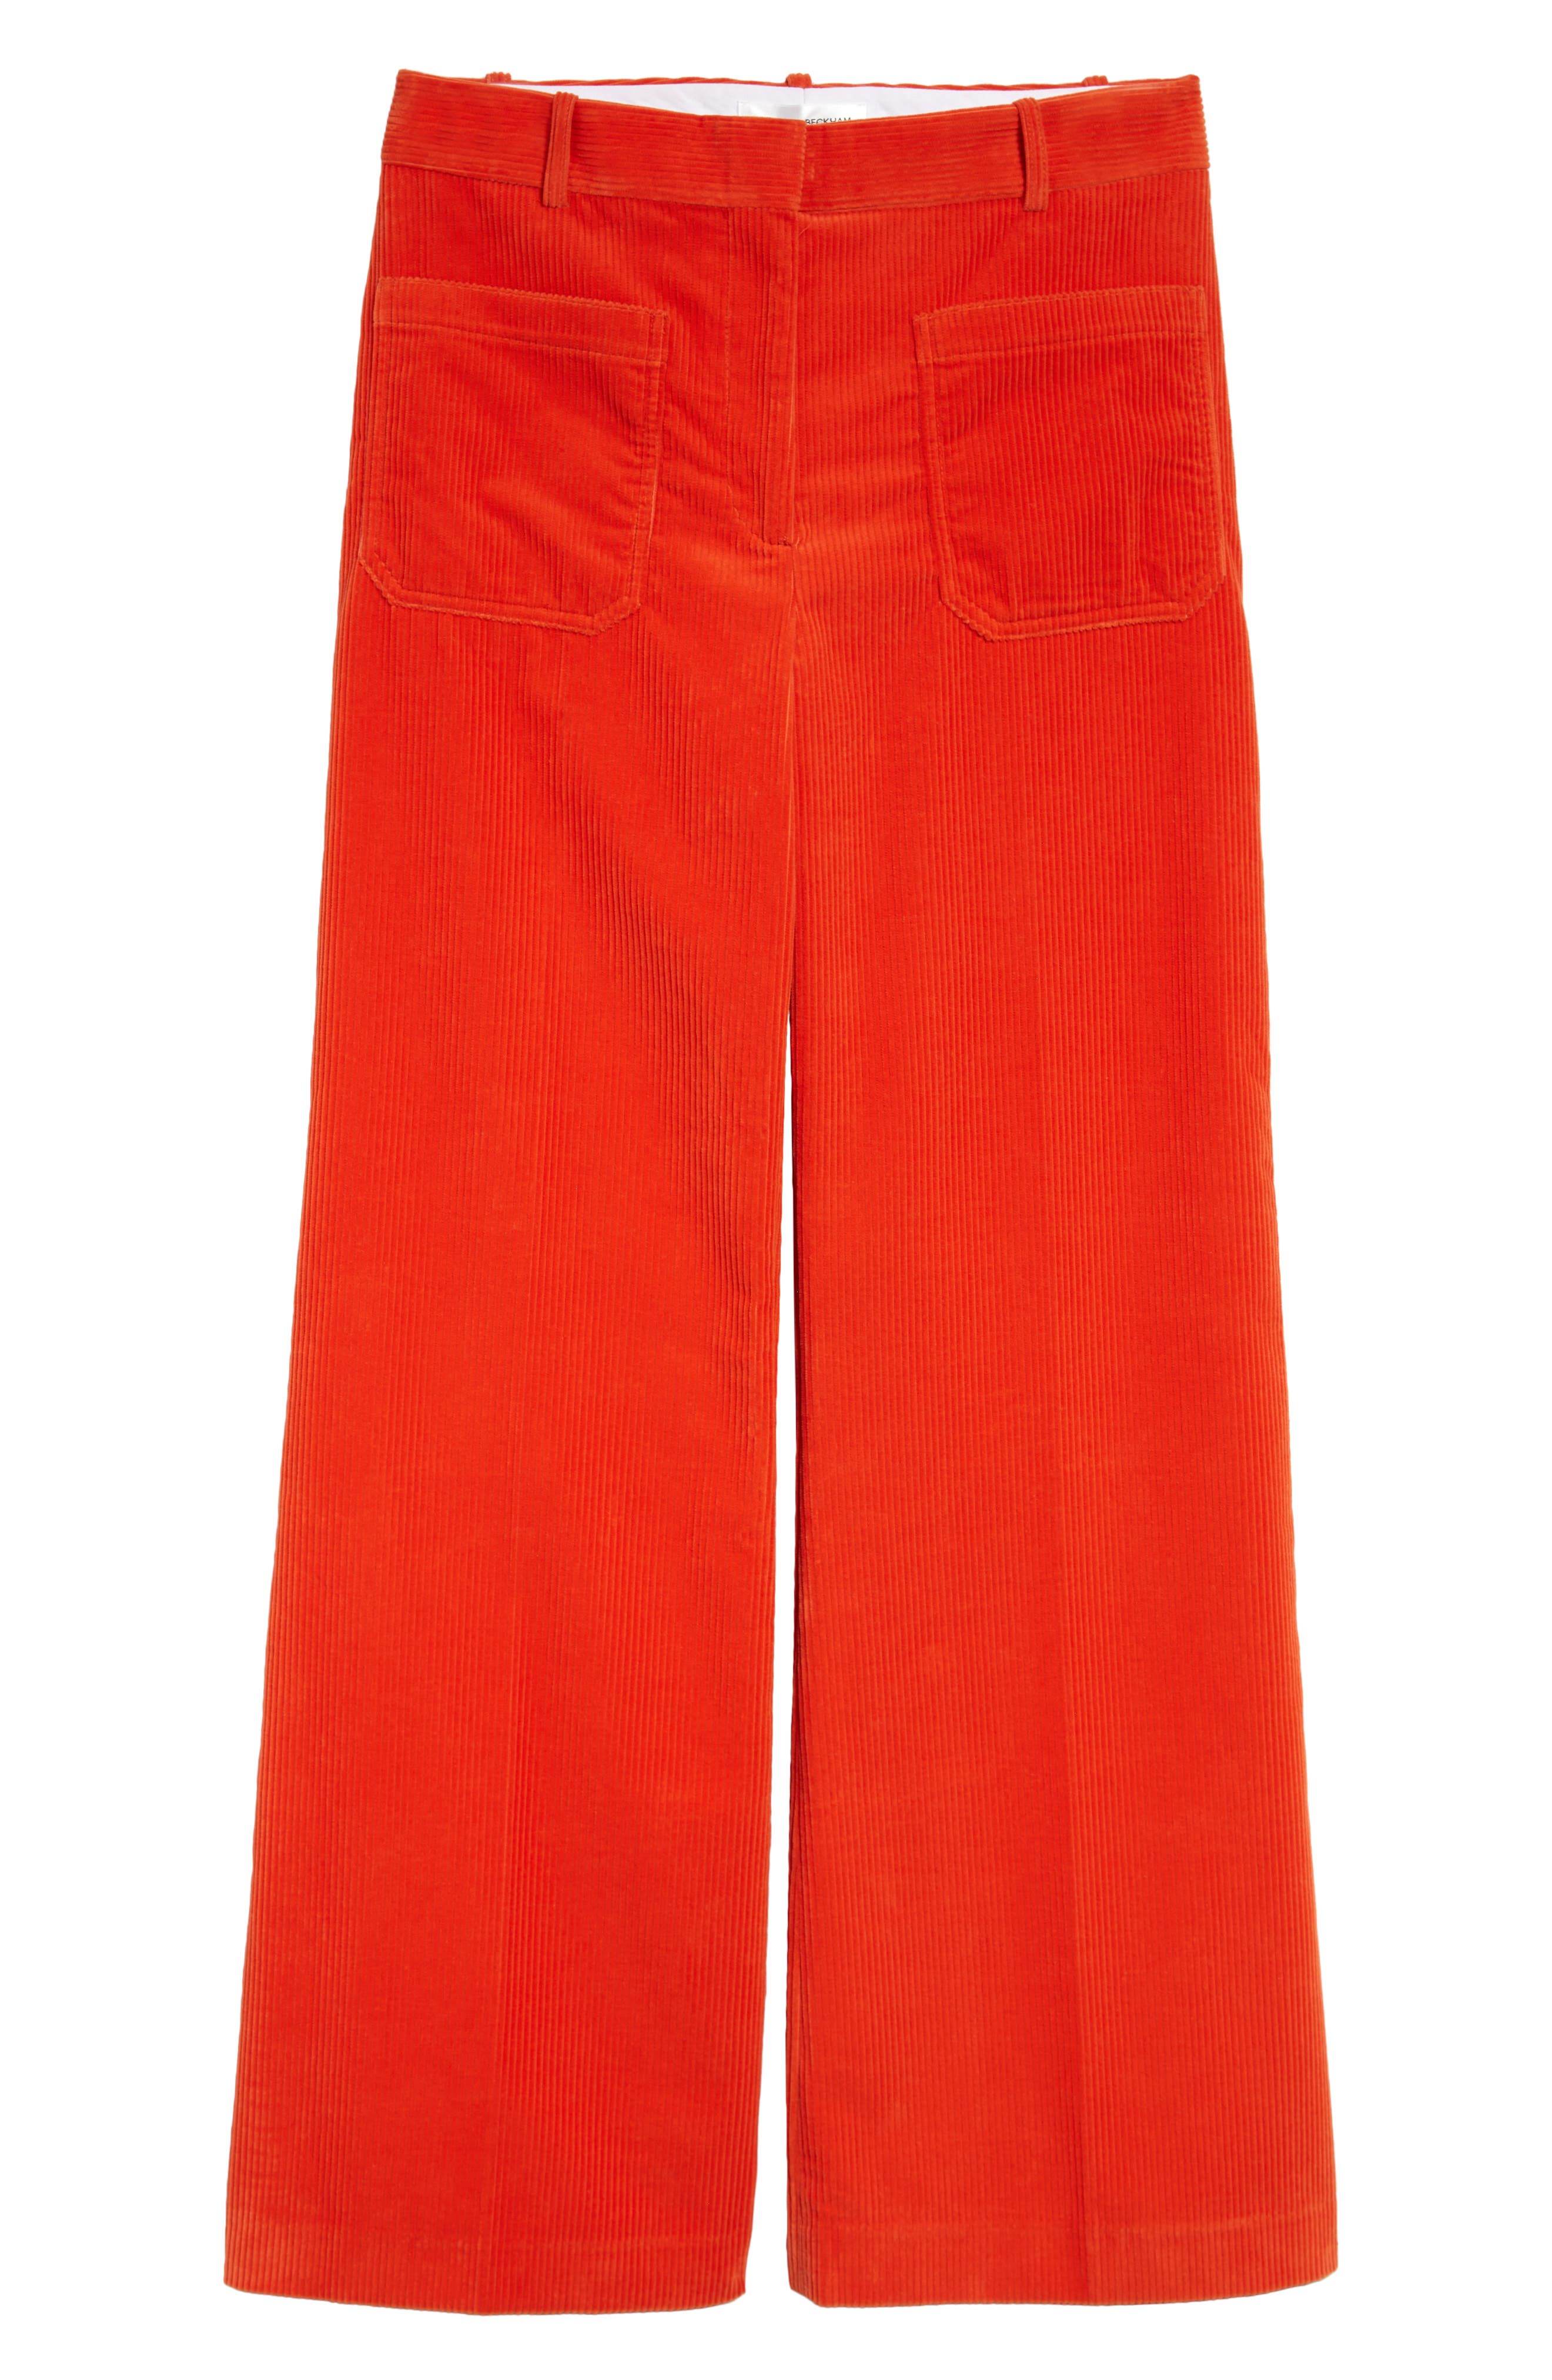 Victoria Beckham Alina Patch Pocket Cotton Corduroy Trousers in Bright Orange